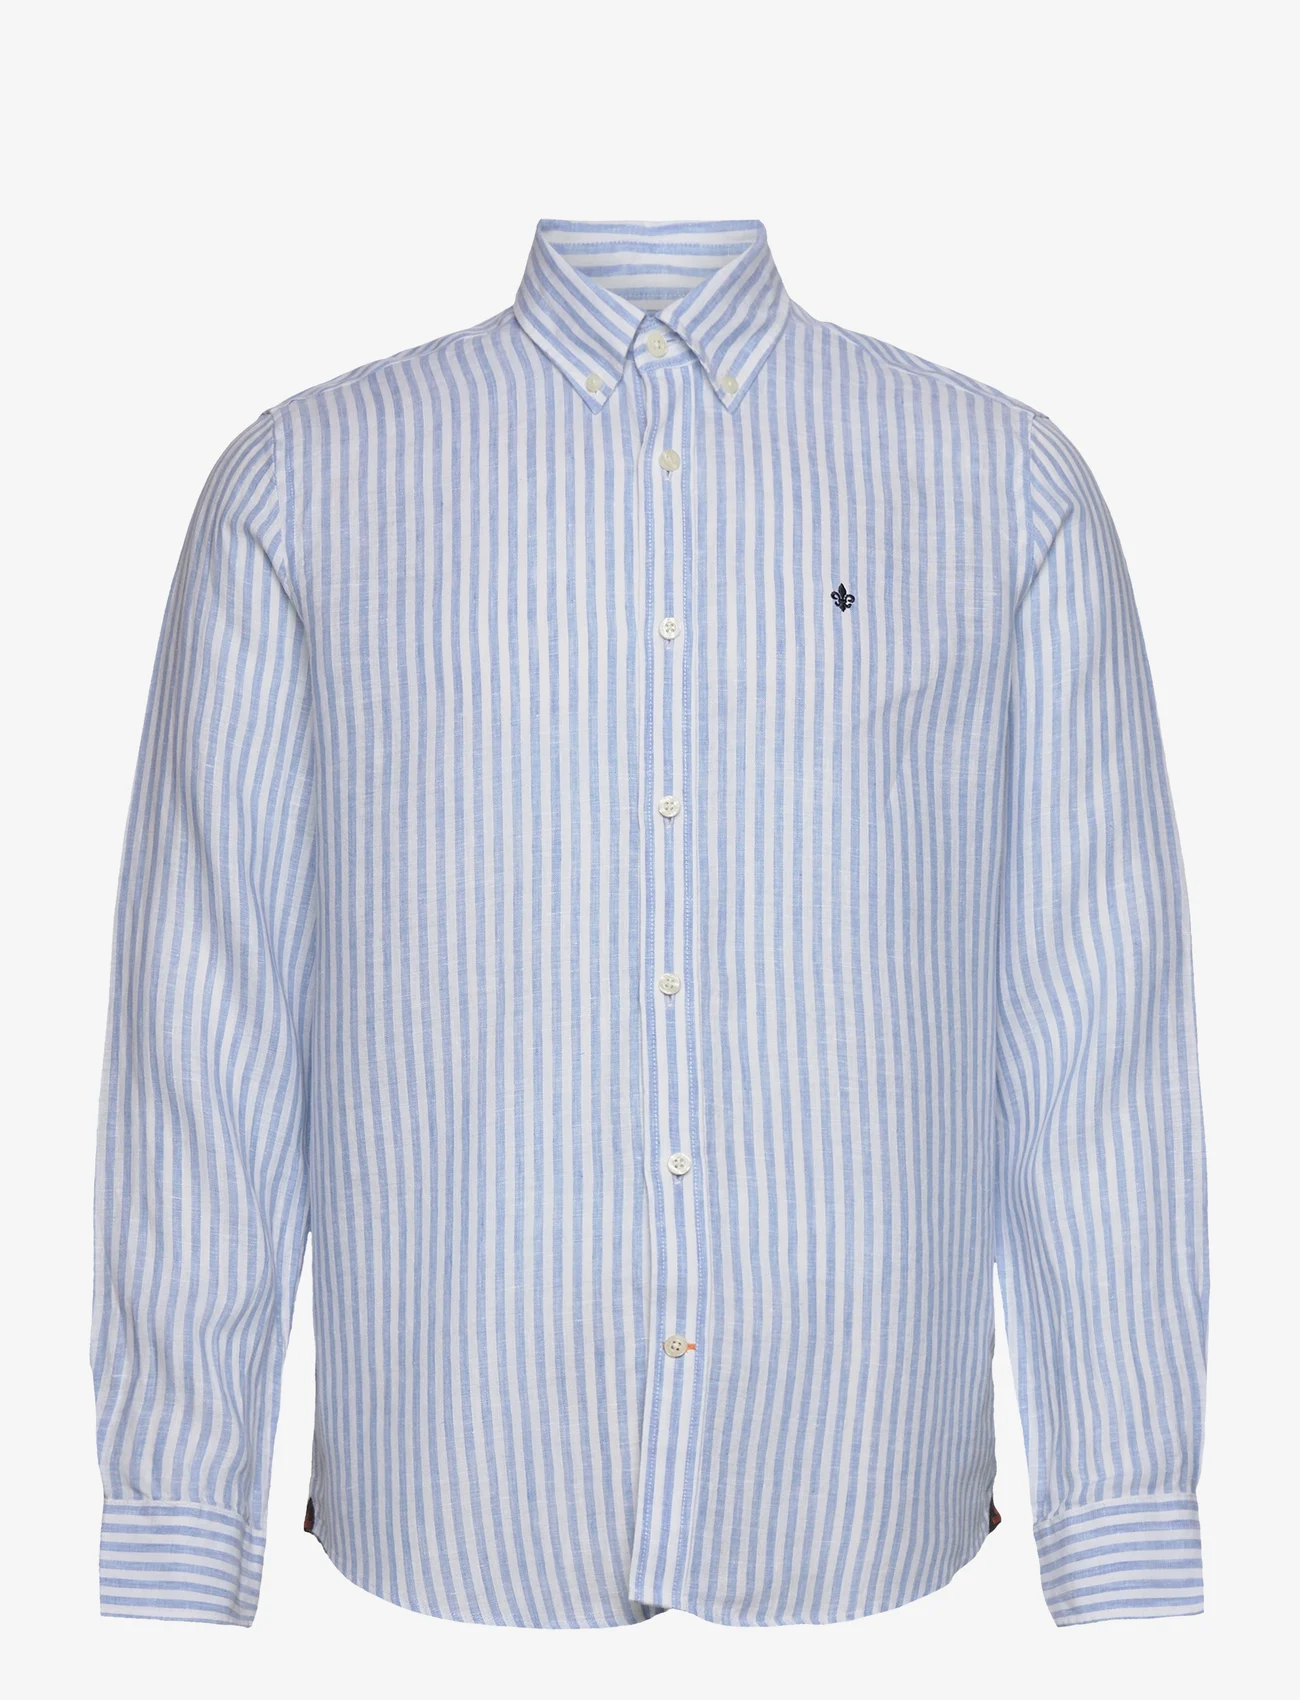 Morris - Douglas Linen Stripe BD Shirt - linskjorter - blue - 0